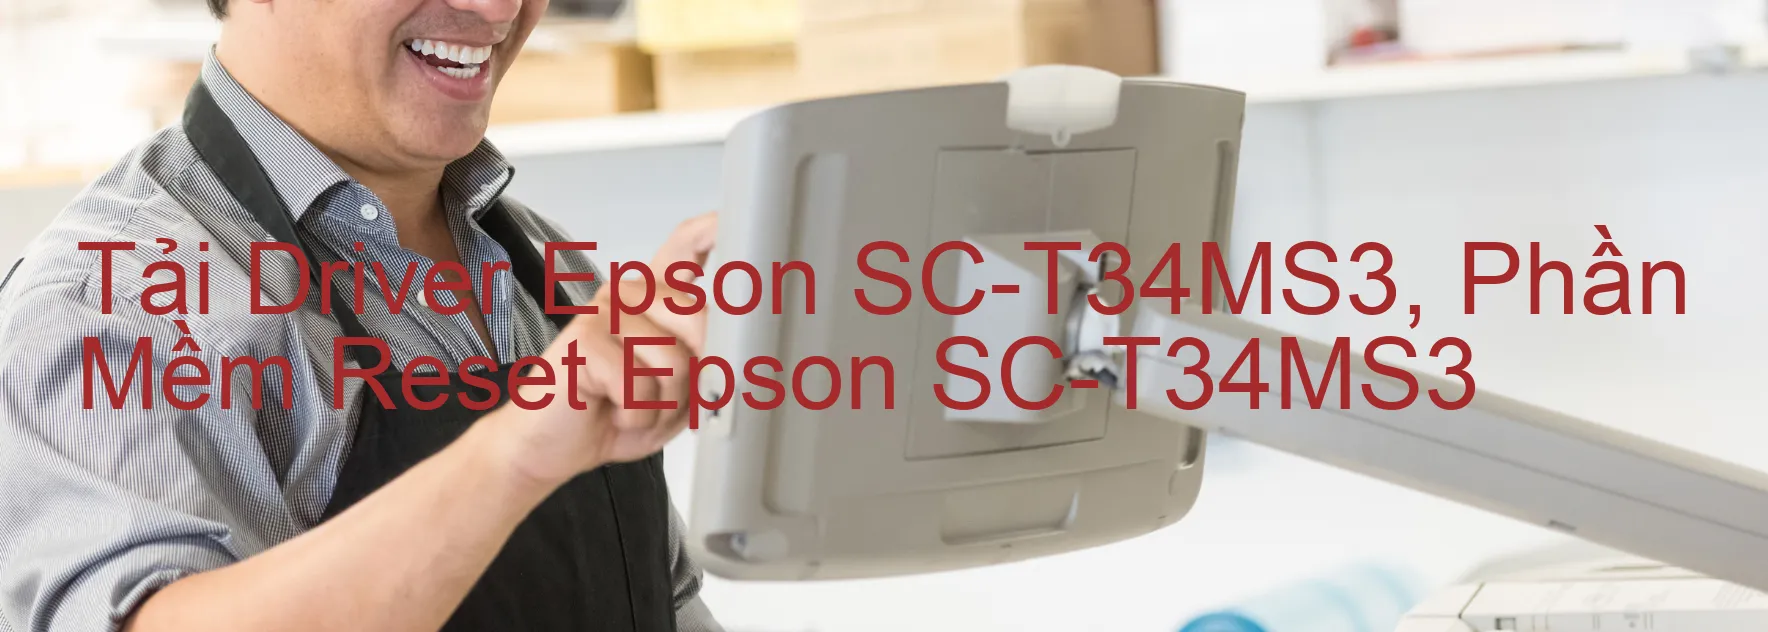 Driver Epson SC-T34MS3, Phần Mềm Reset Epson SC-T34MS3